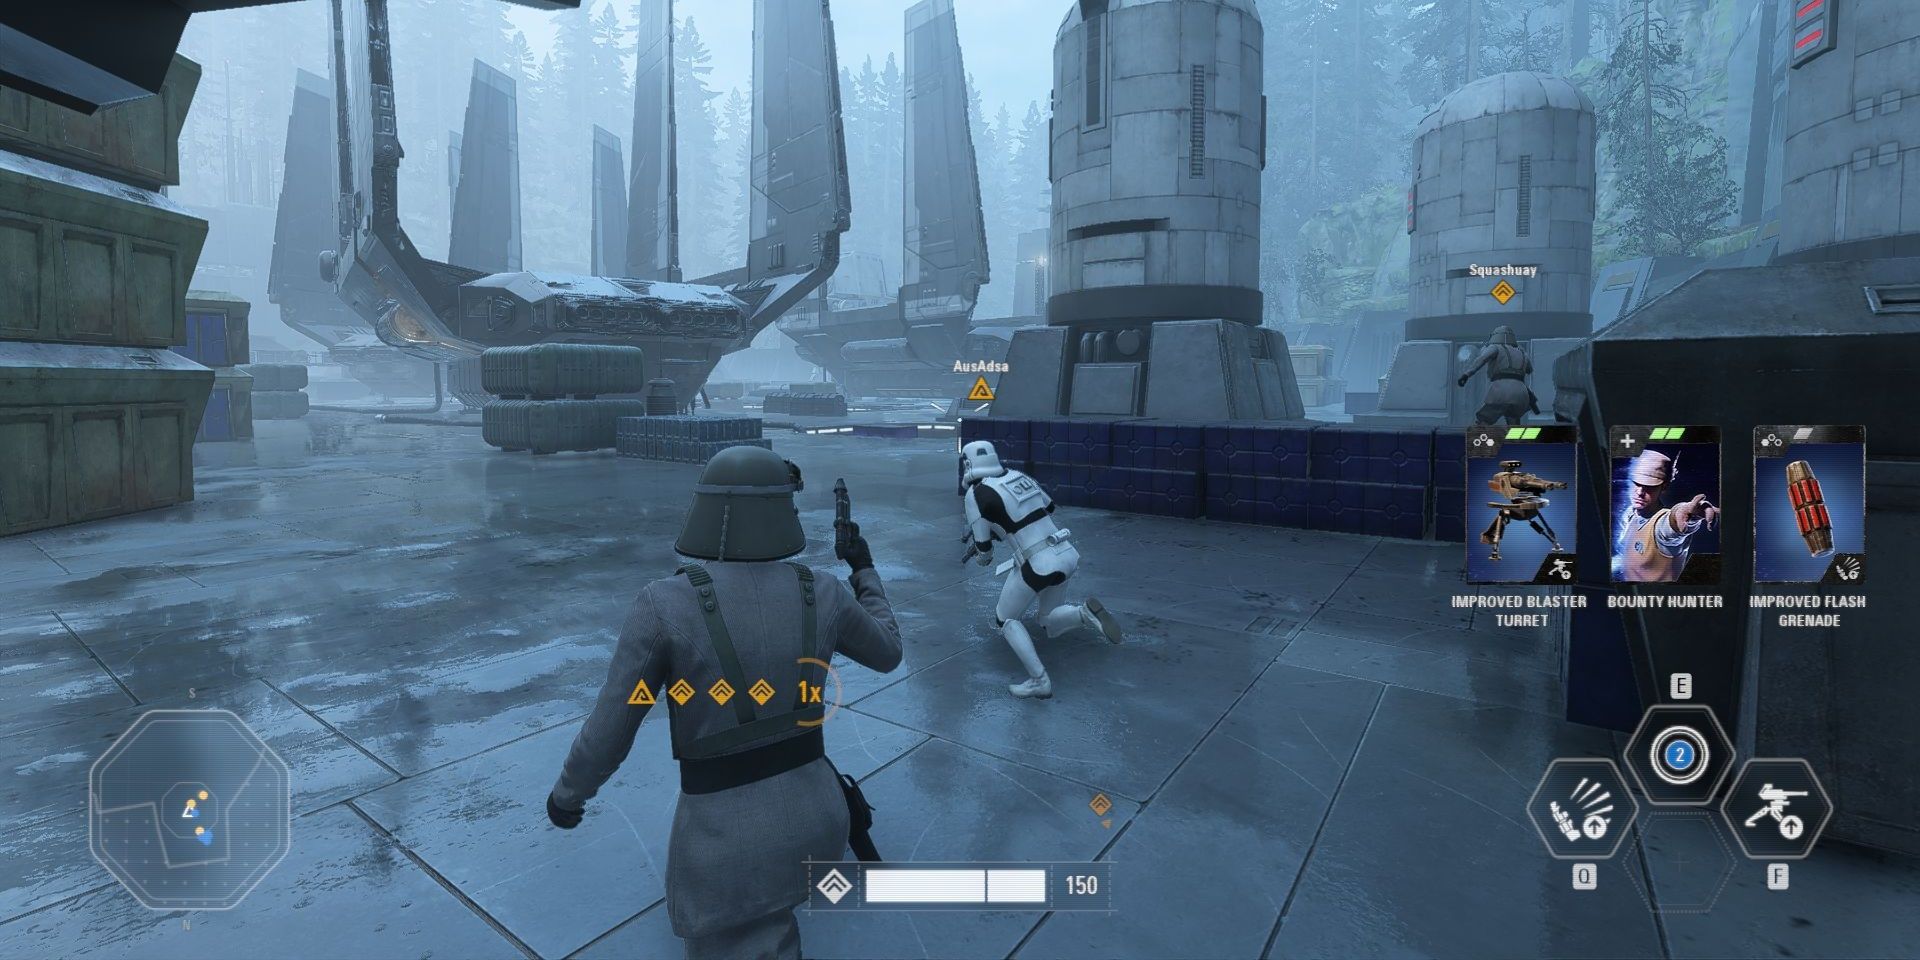 A screenshot showing gameplay in Star Wars Battlefront 2